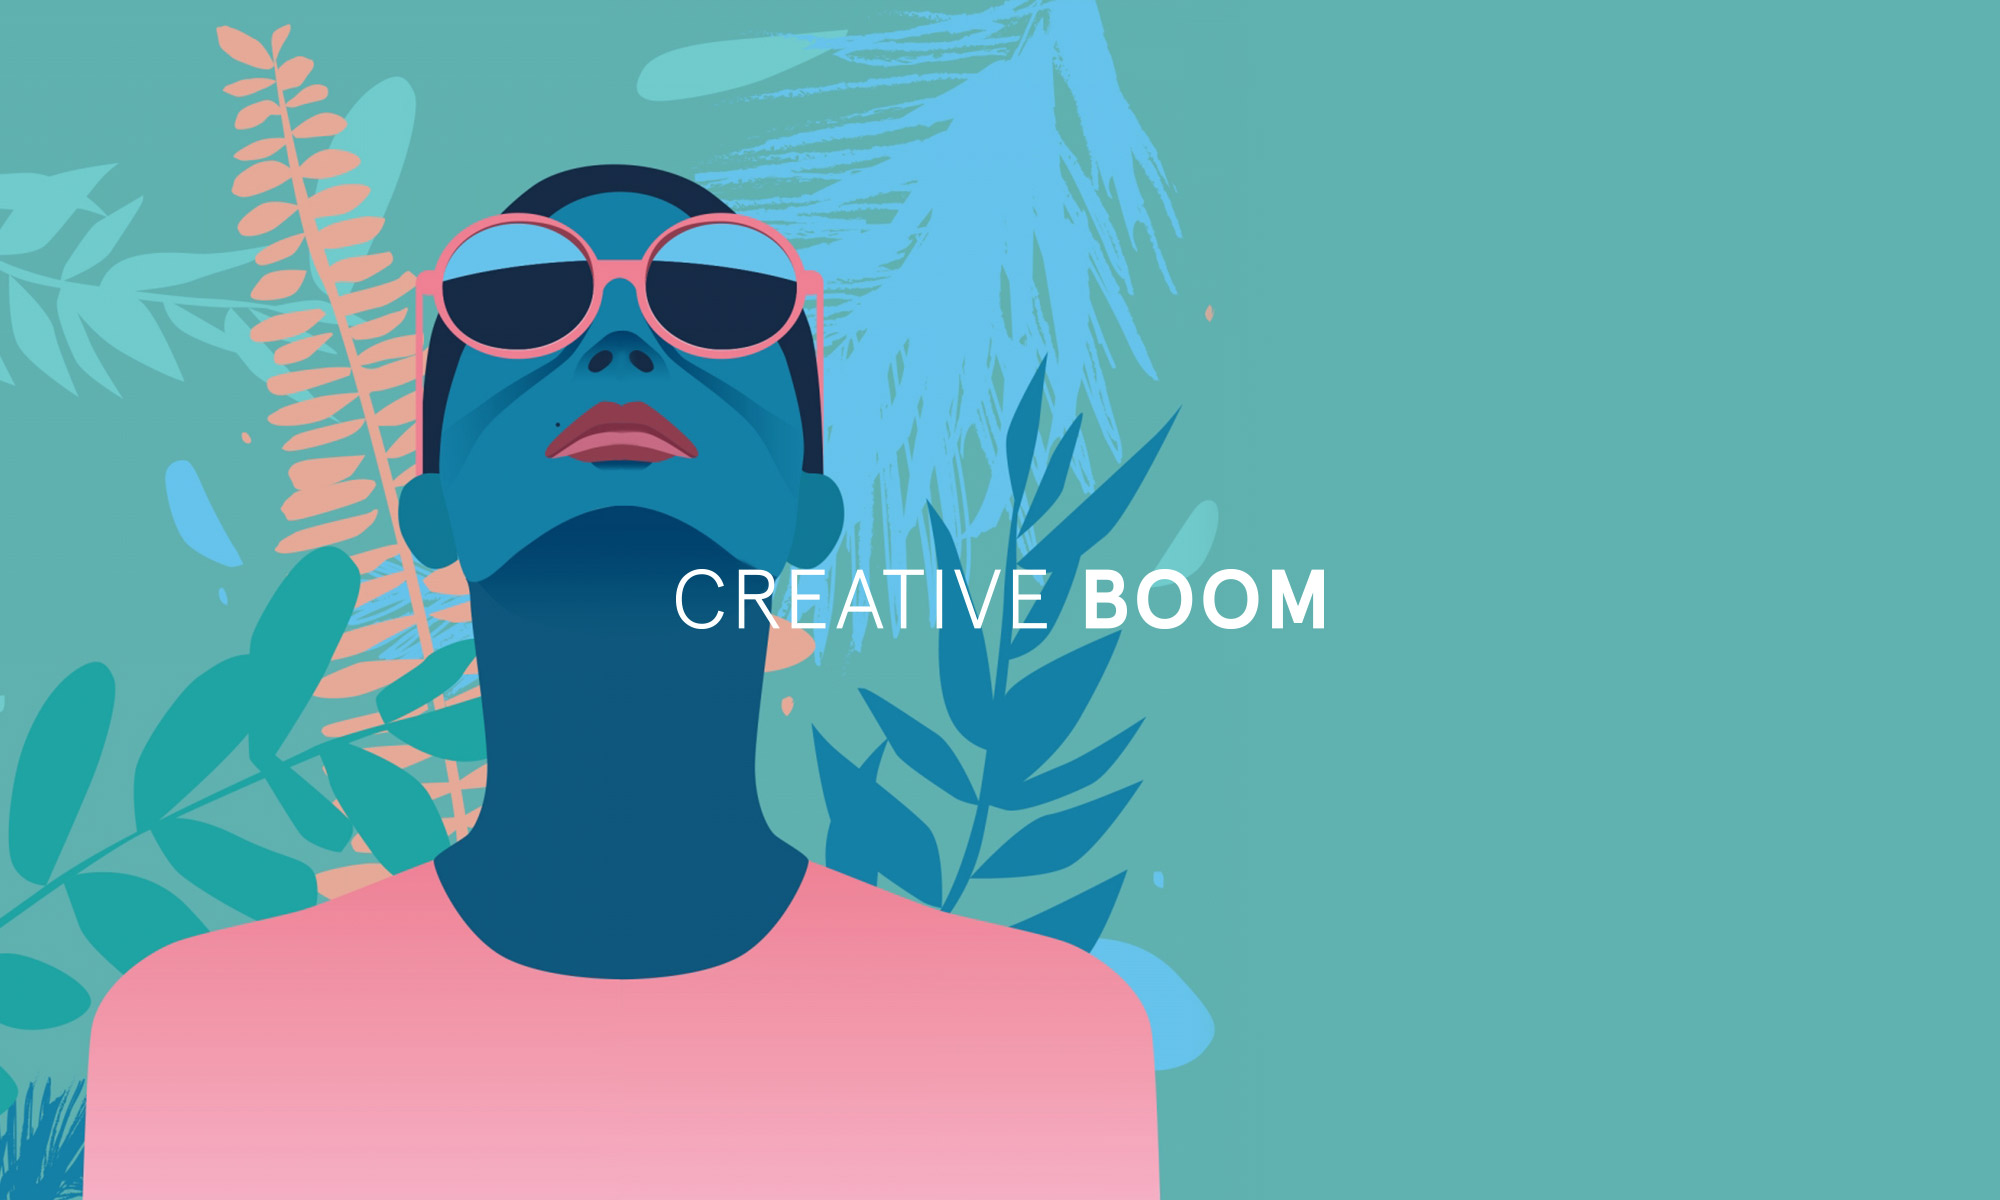 Creative Boom